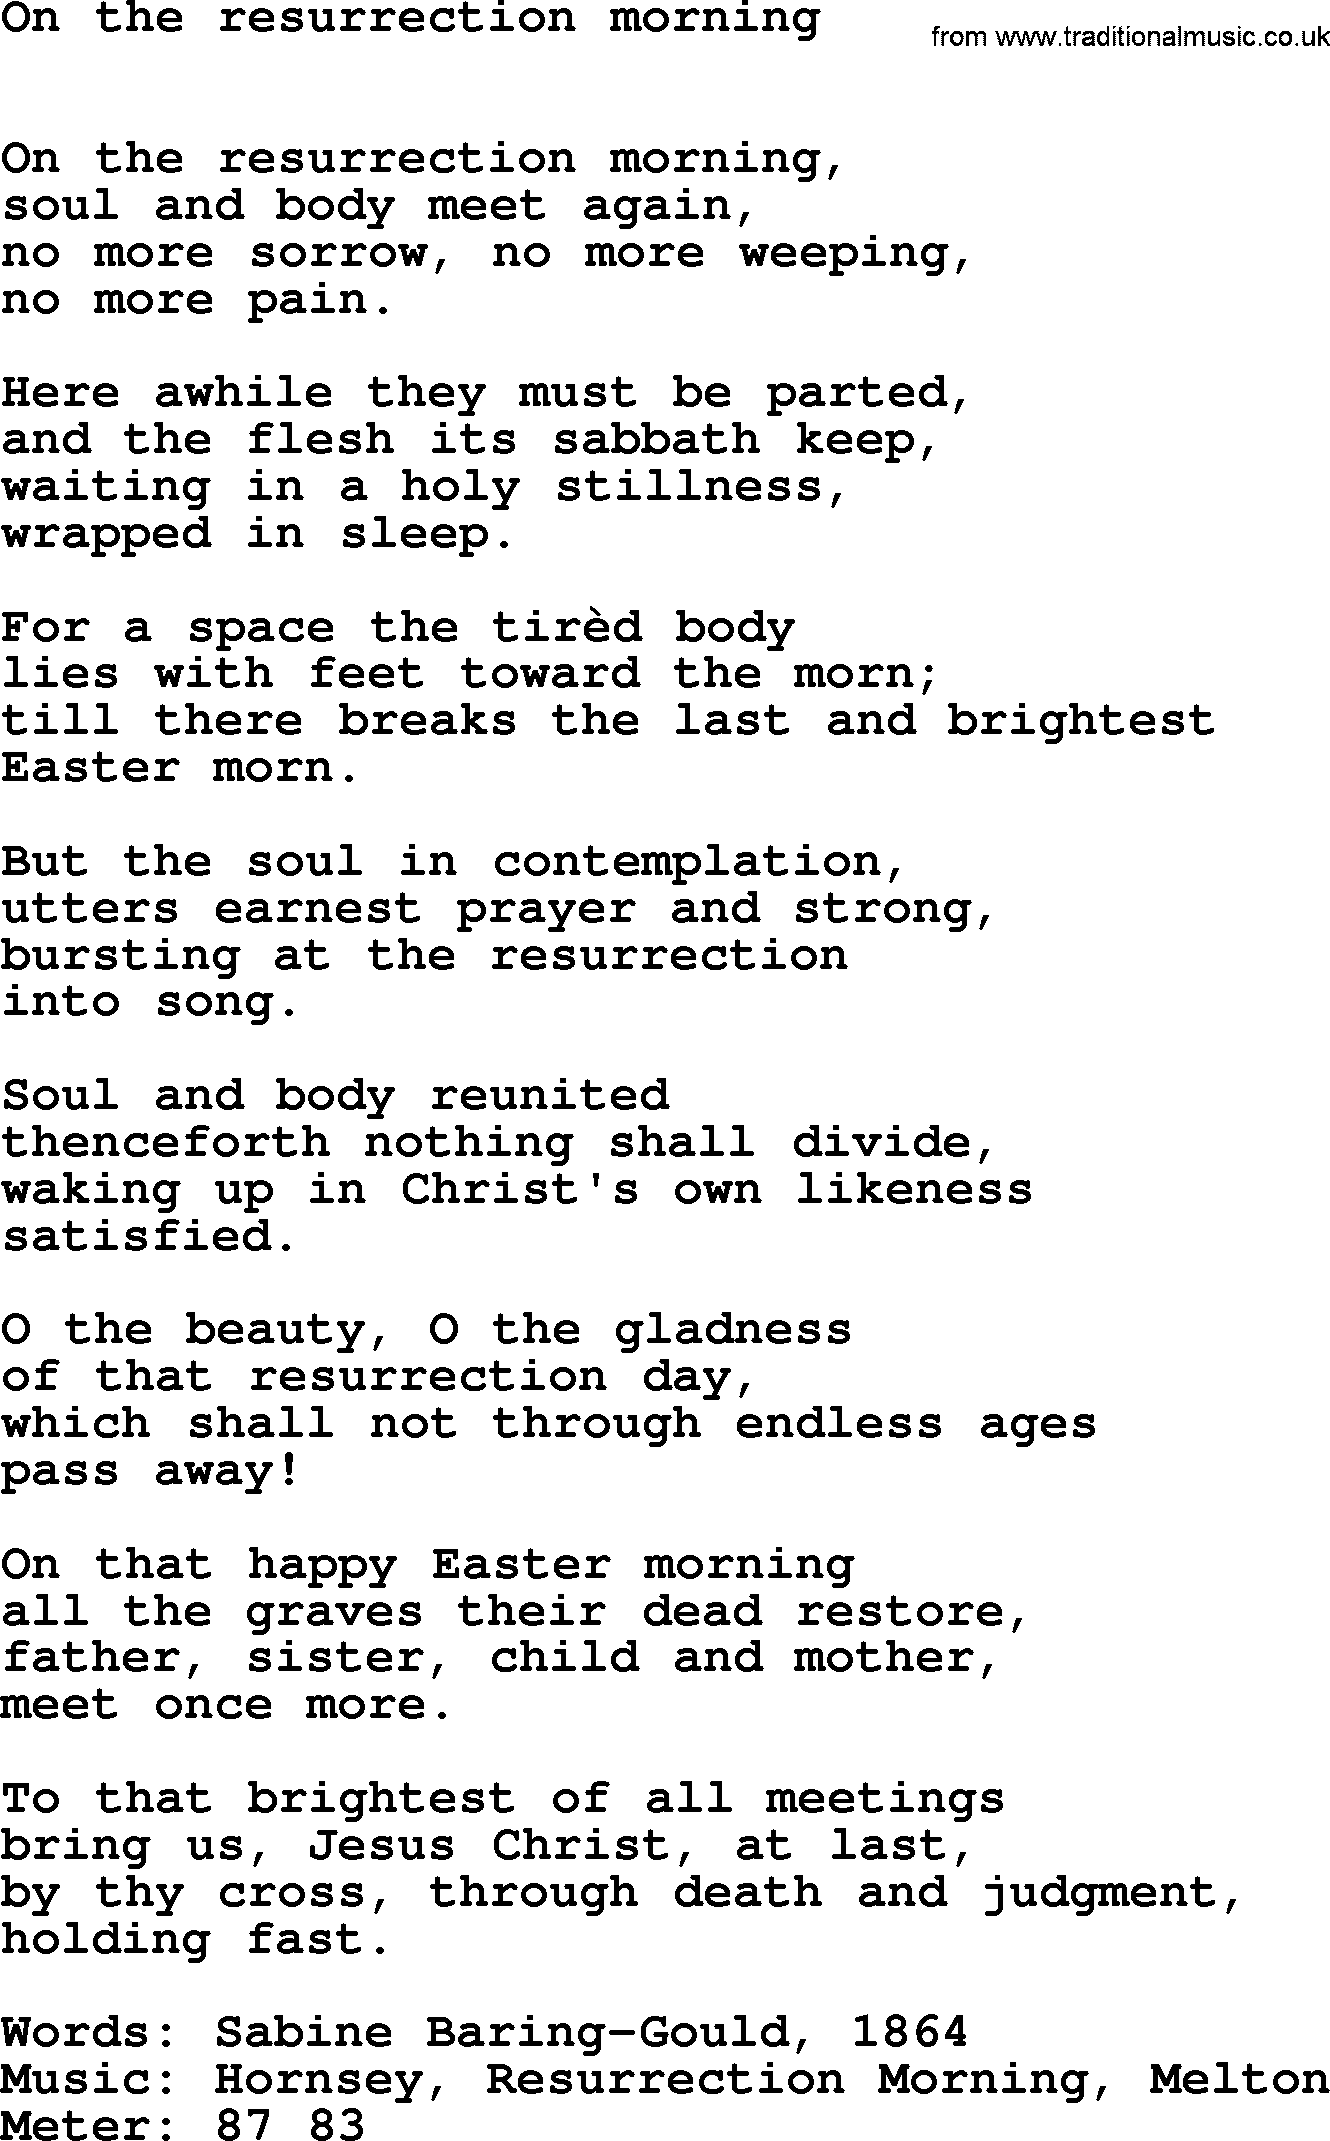 Book of Common Praise Hymn: On The Resurrection Morning.txt lyrics with midi music